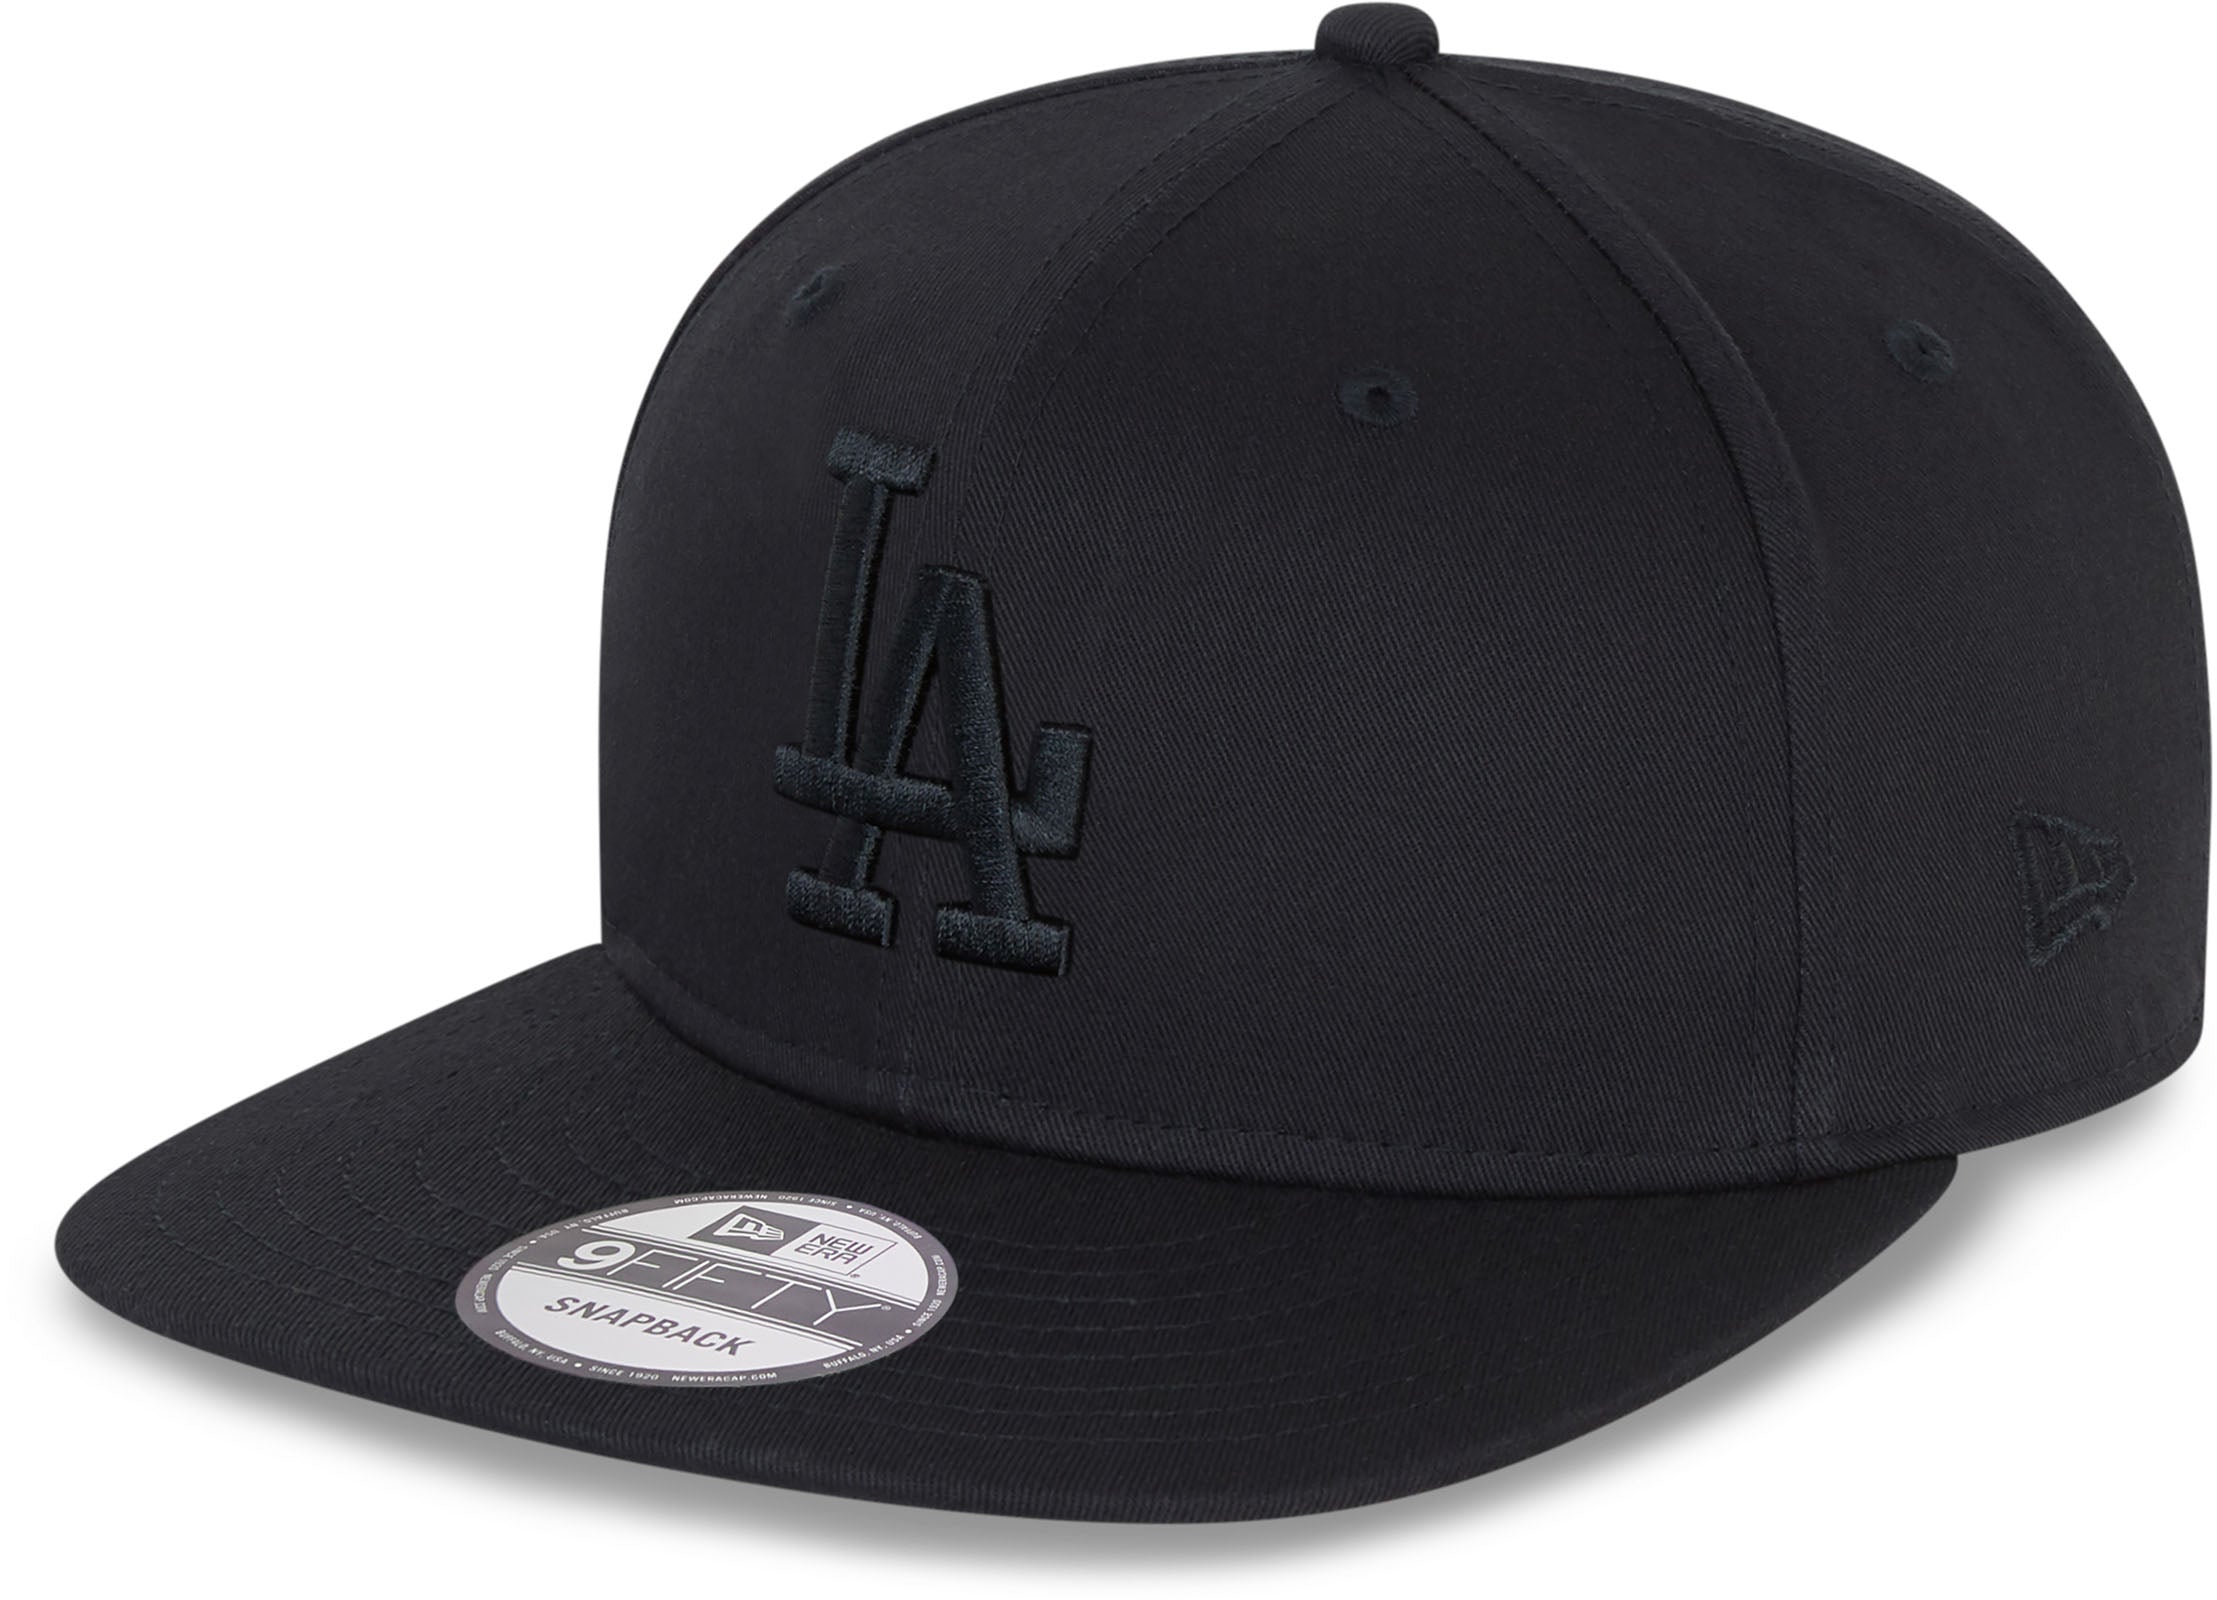 New Era Los Angeles Dodgers MLB Basic 9FIFTY Snapback Hat